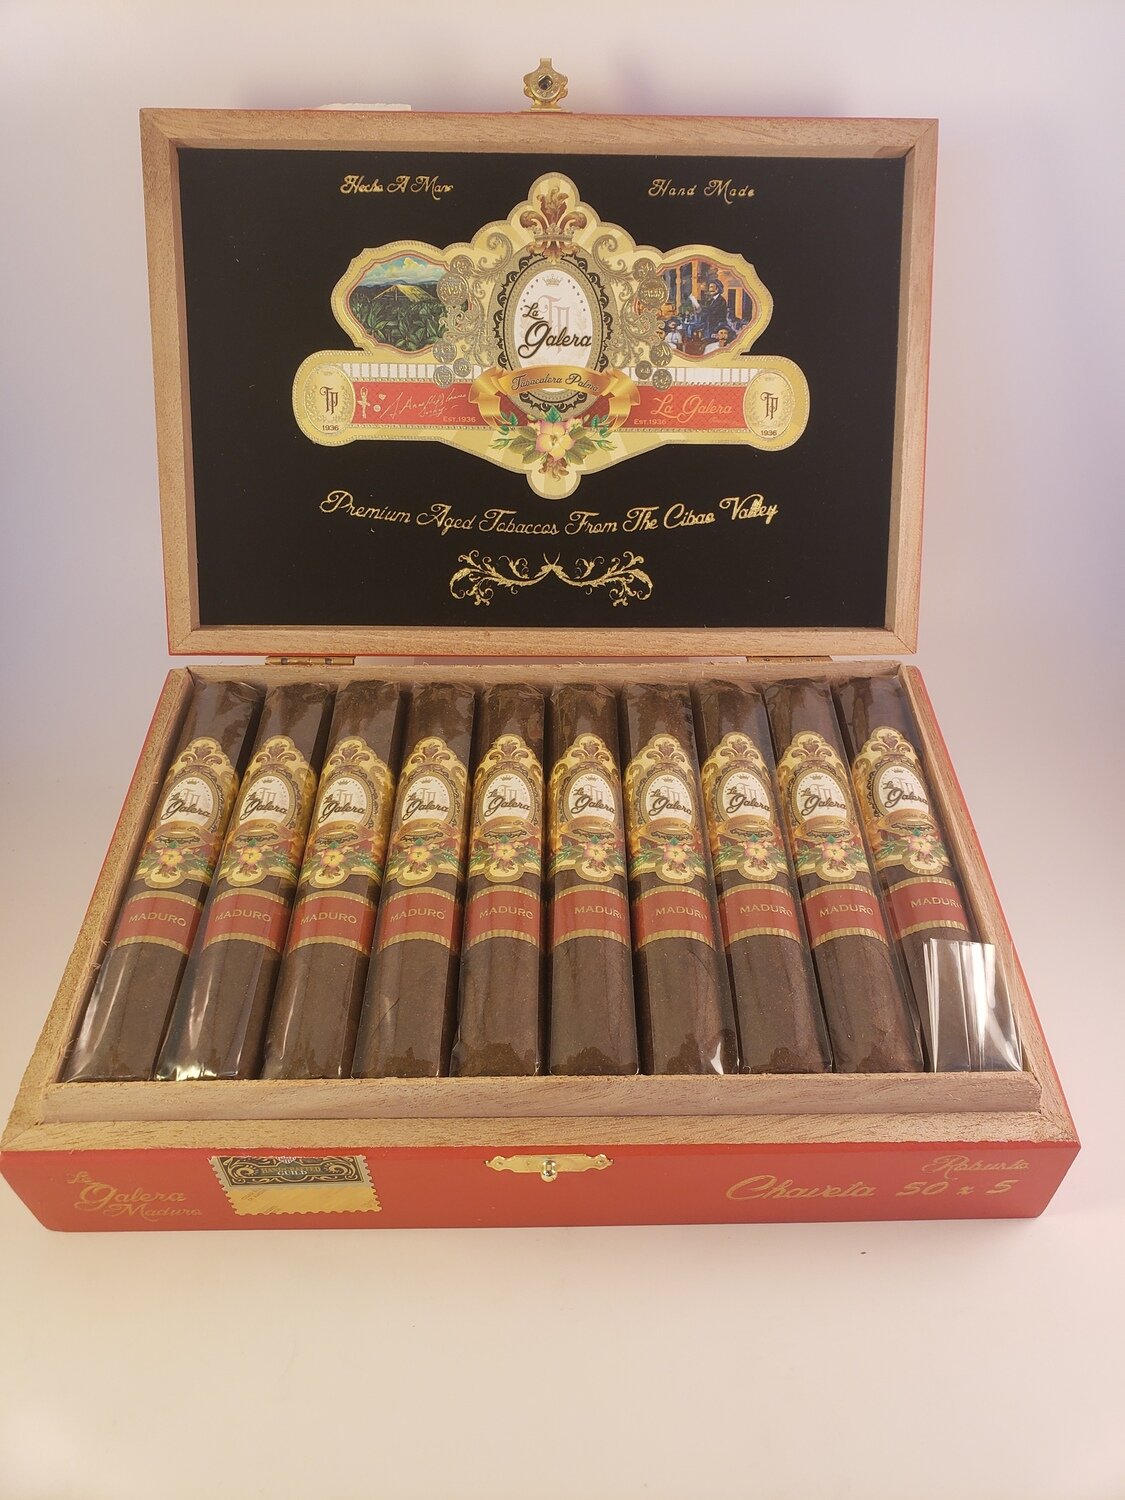 La Galera Maduro Gordo Pilones 6 1/4 x 60 Single Cigar